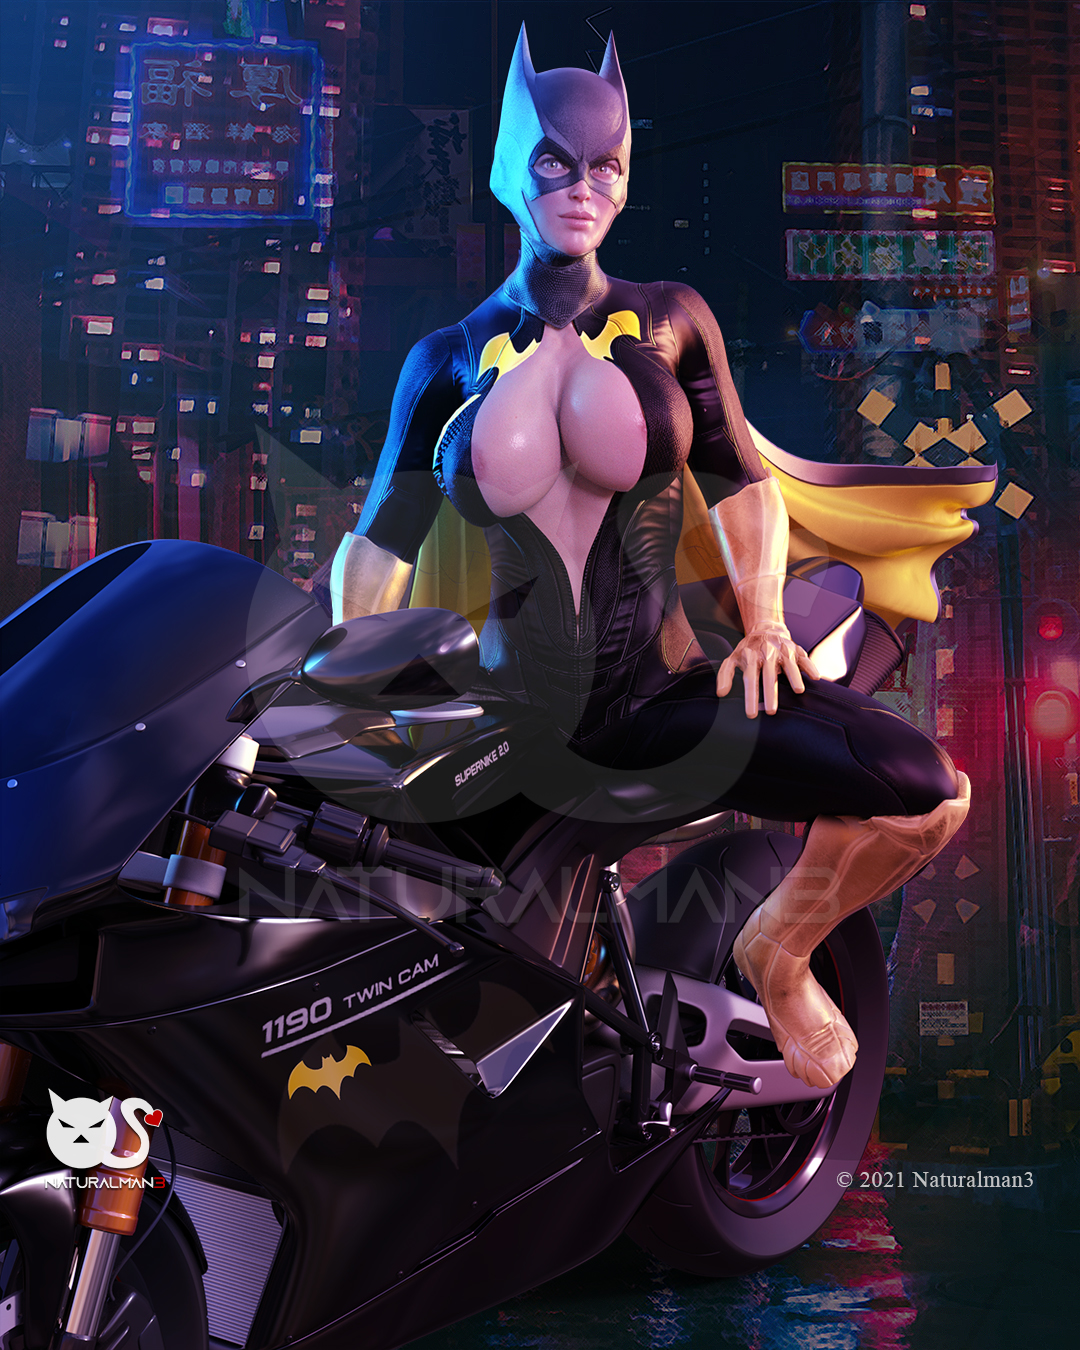 Batwoman - Fanart by Naturalman3 on DeviantArt